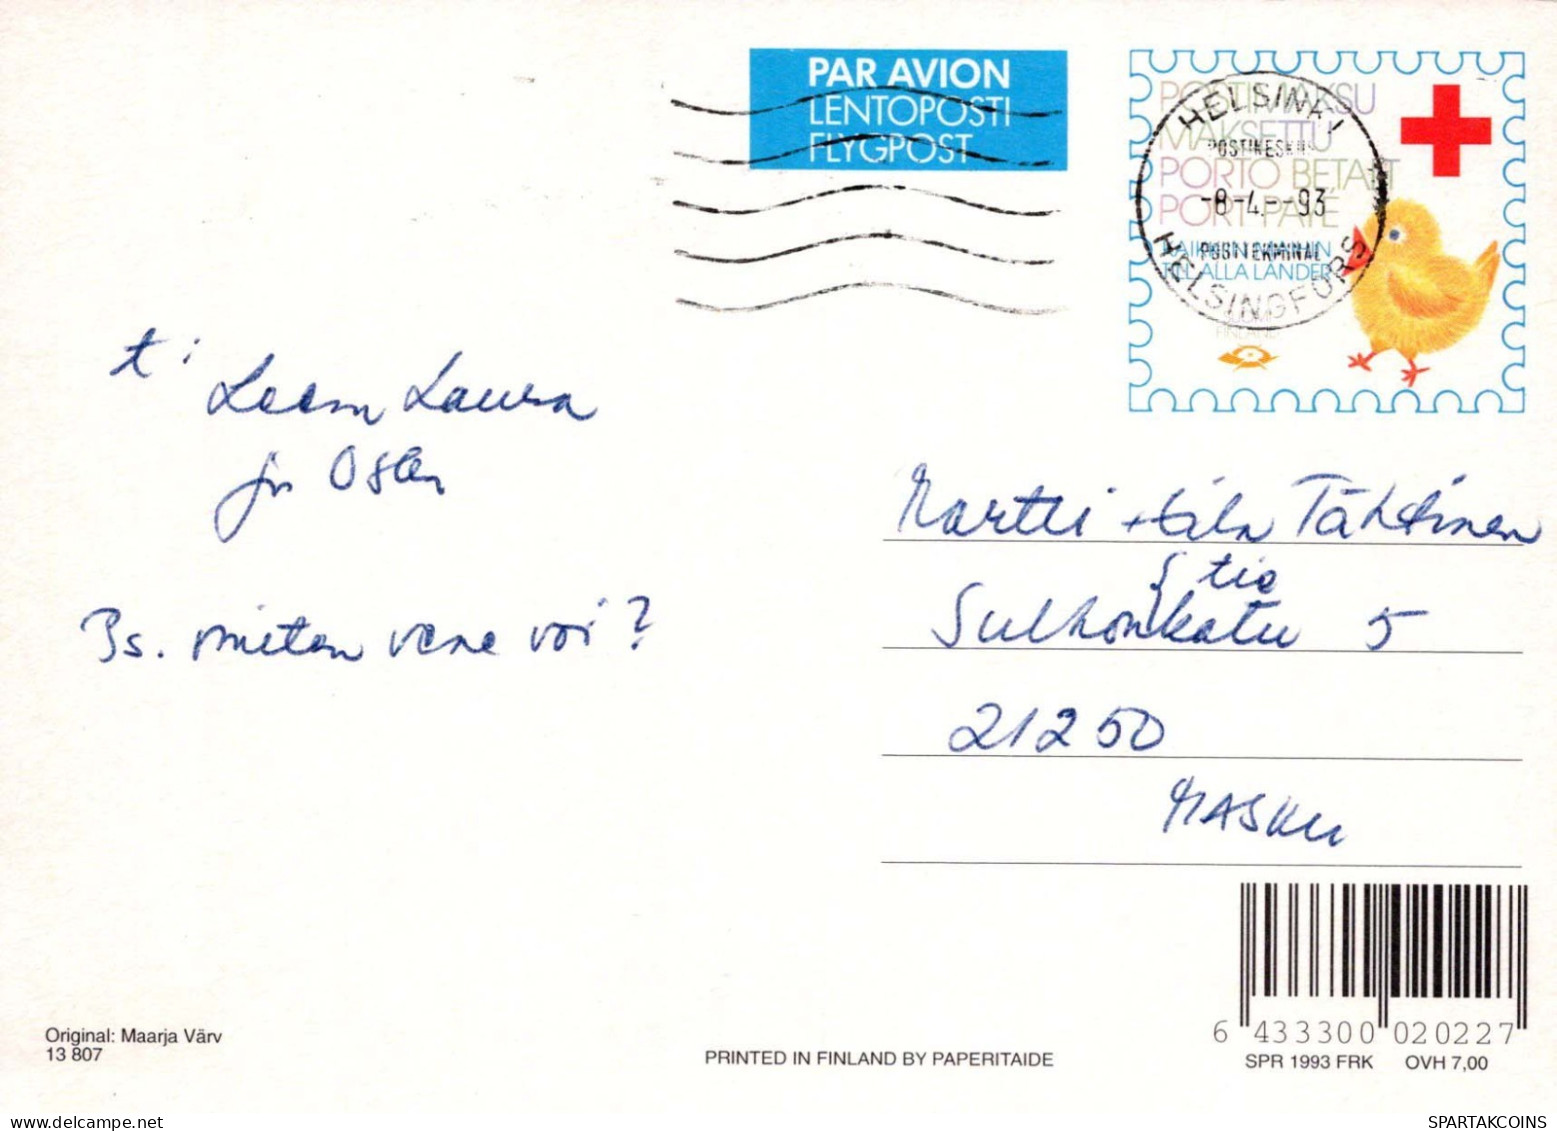 PASQUA BAMBINO UOVO Vintage Cartolina CPSM #PBO284.IT - Easter